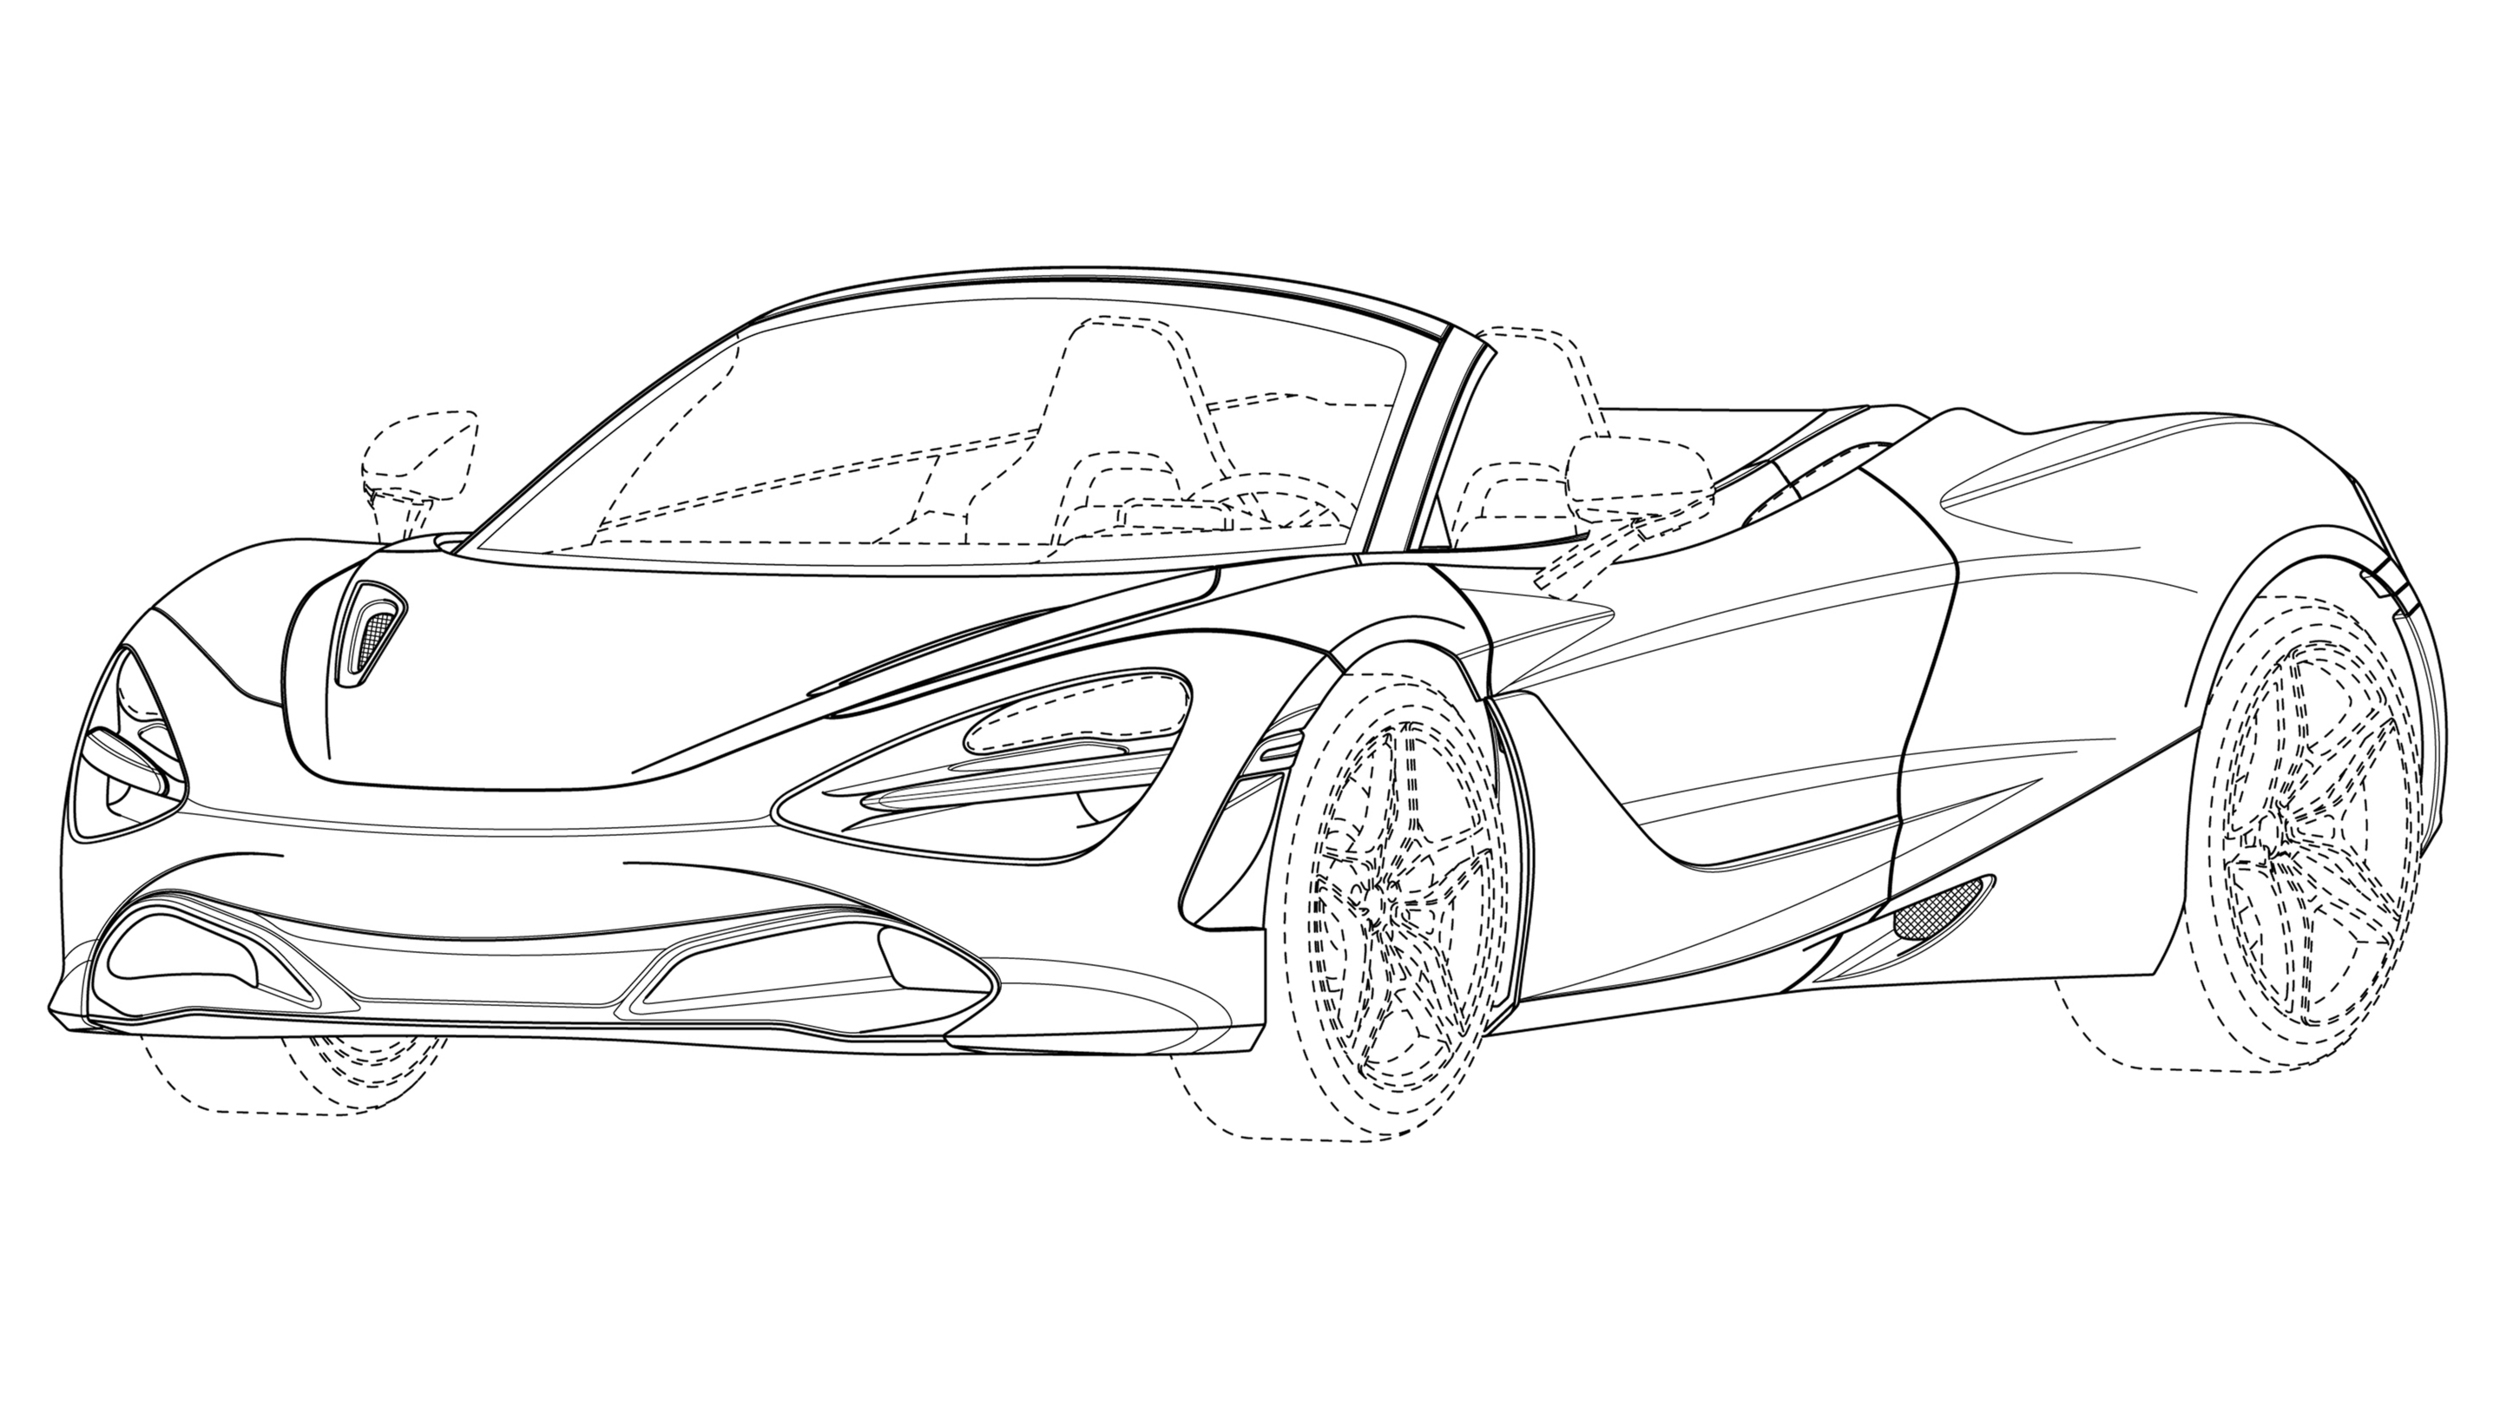 McLaren 720s drawing Luca M